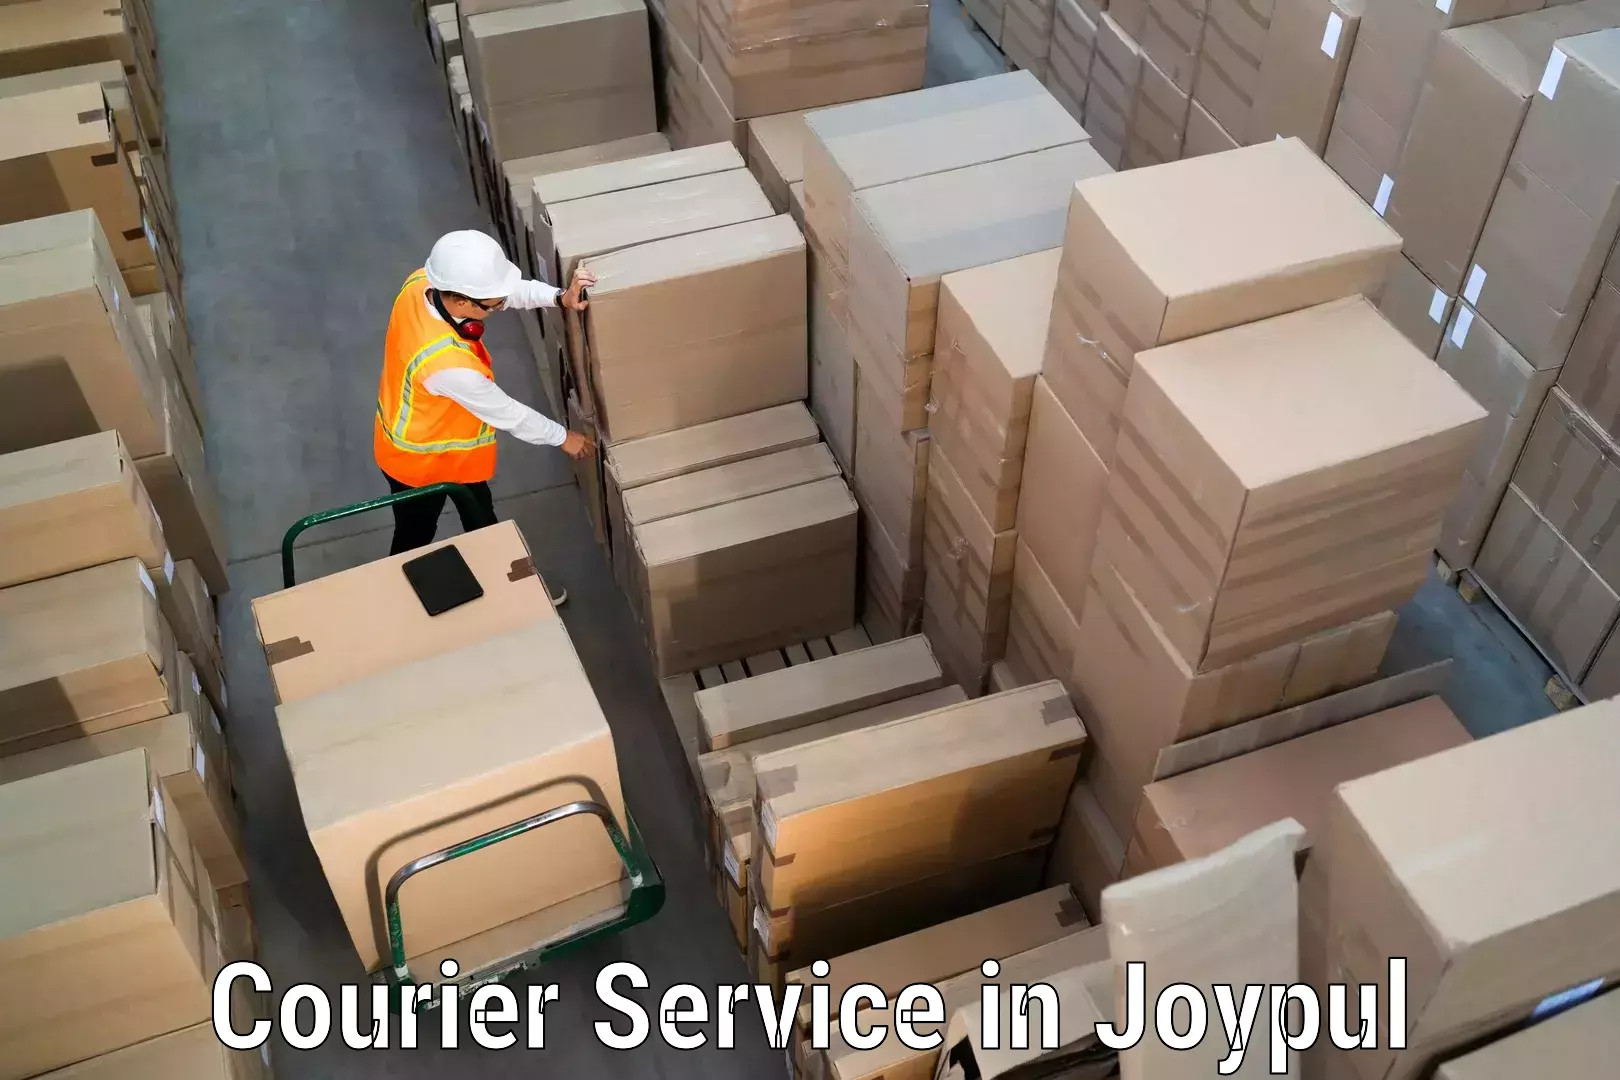 Express logistics service in Joypul